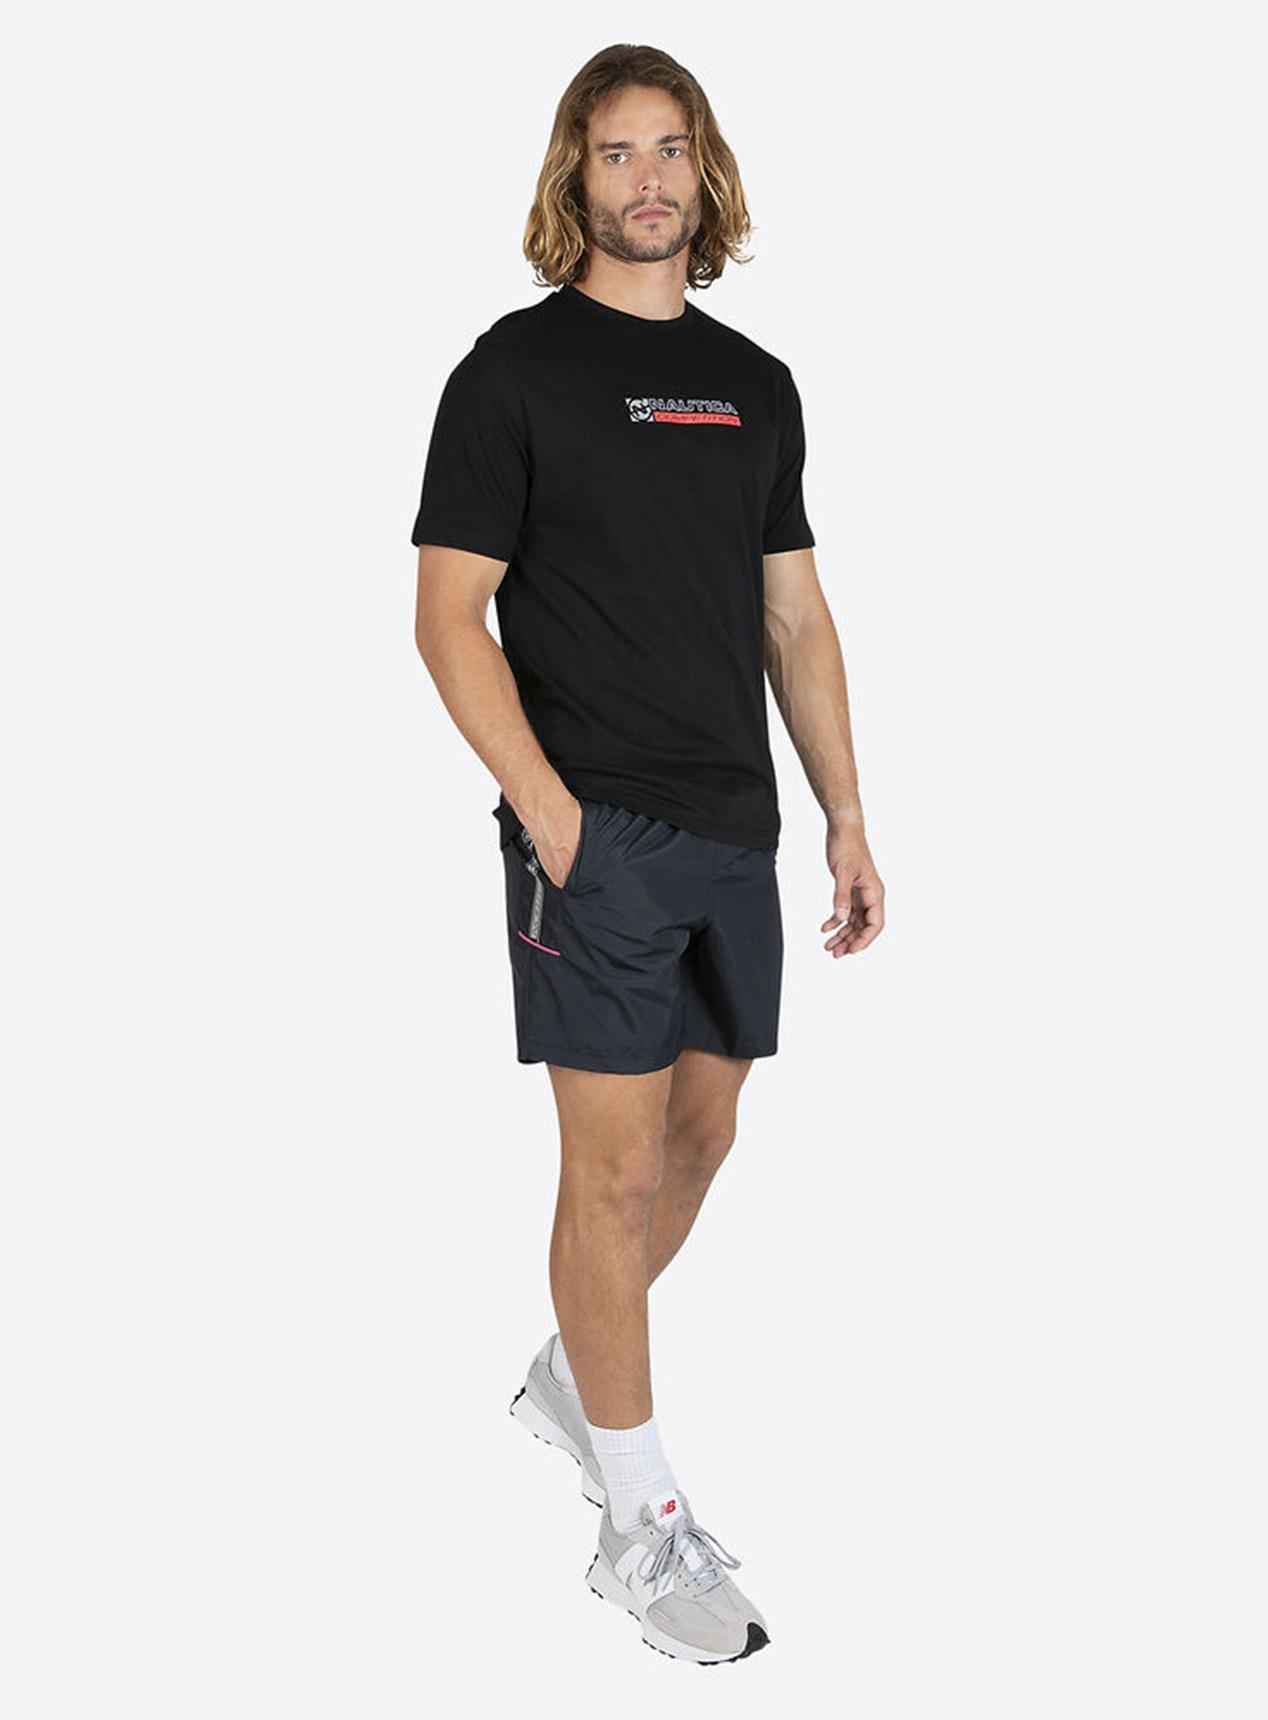 Nautica Montigo T-Shirt - Challenger Streetwear